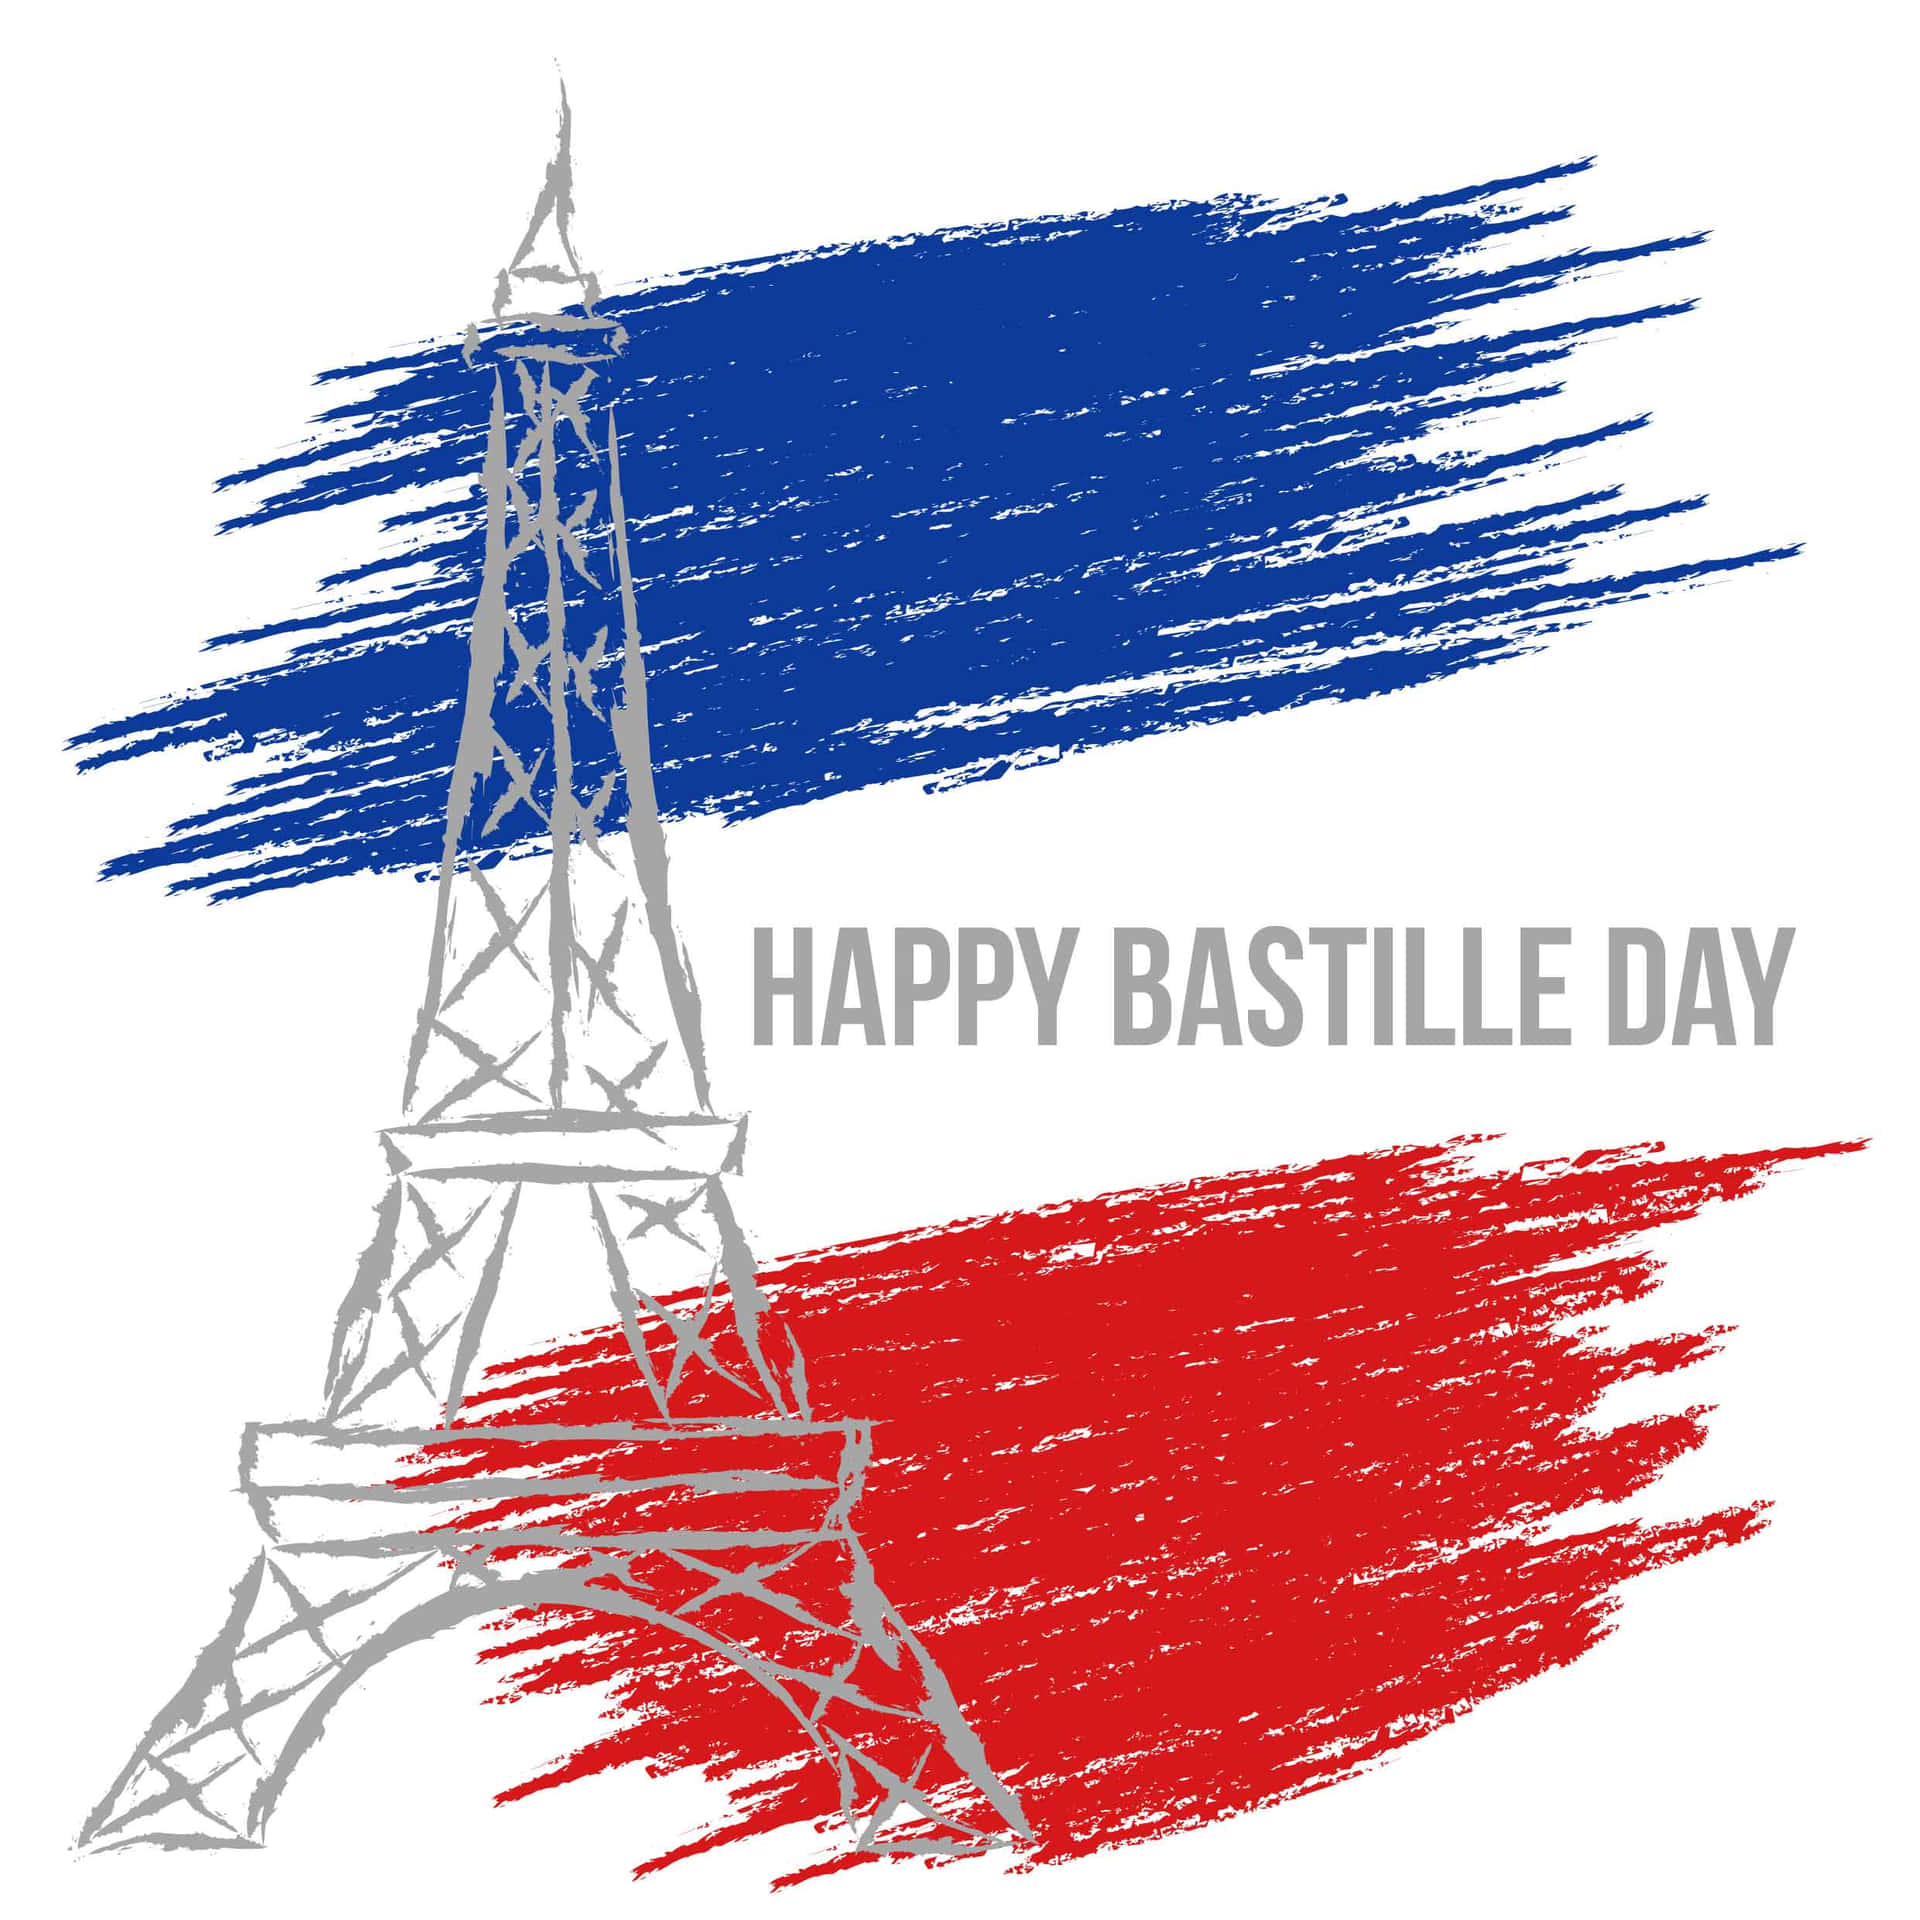 Majestic Fireworks Display Over Eiffel Tower Celebrating Bastille Day